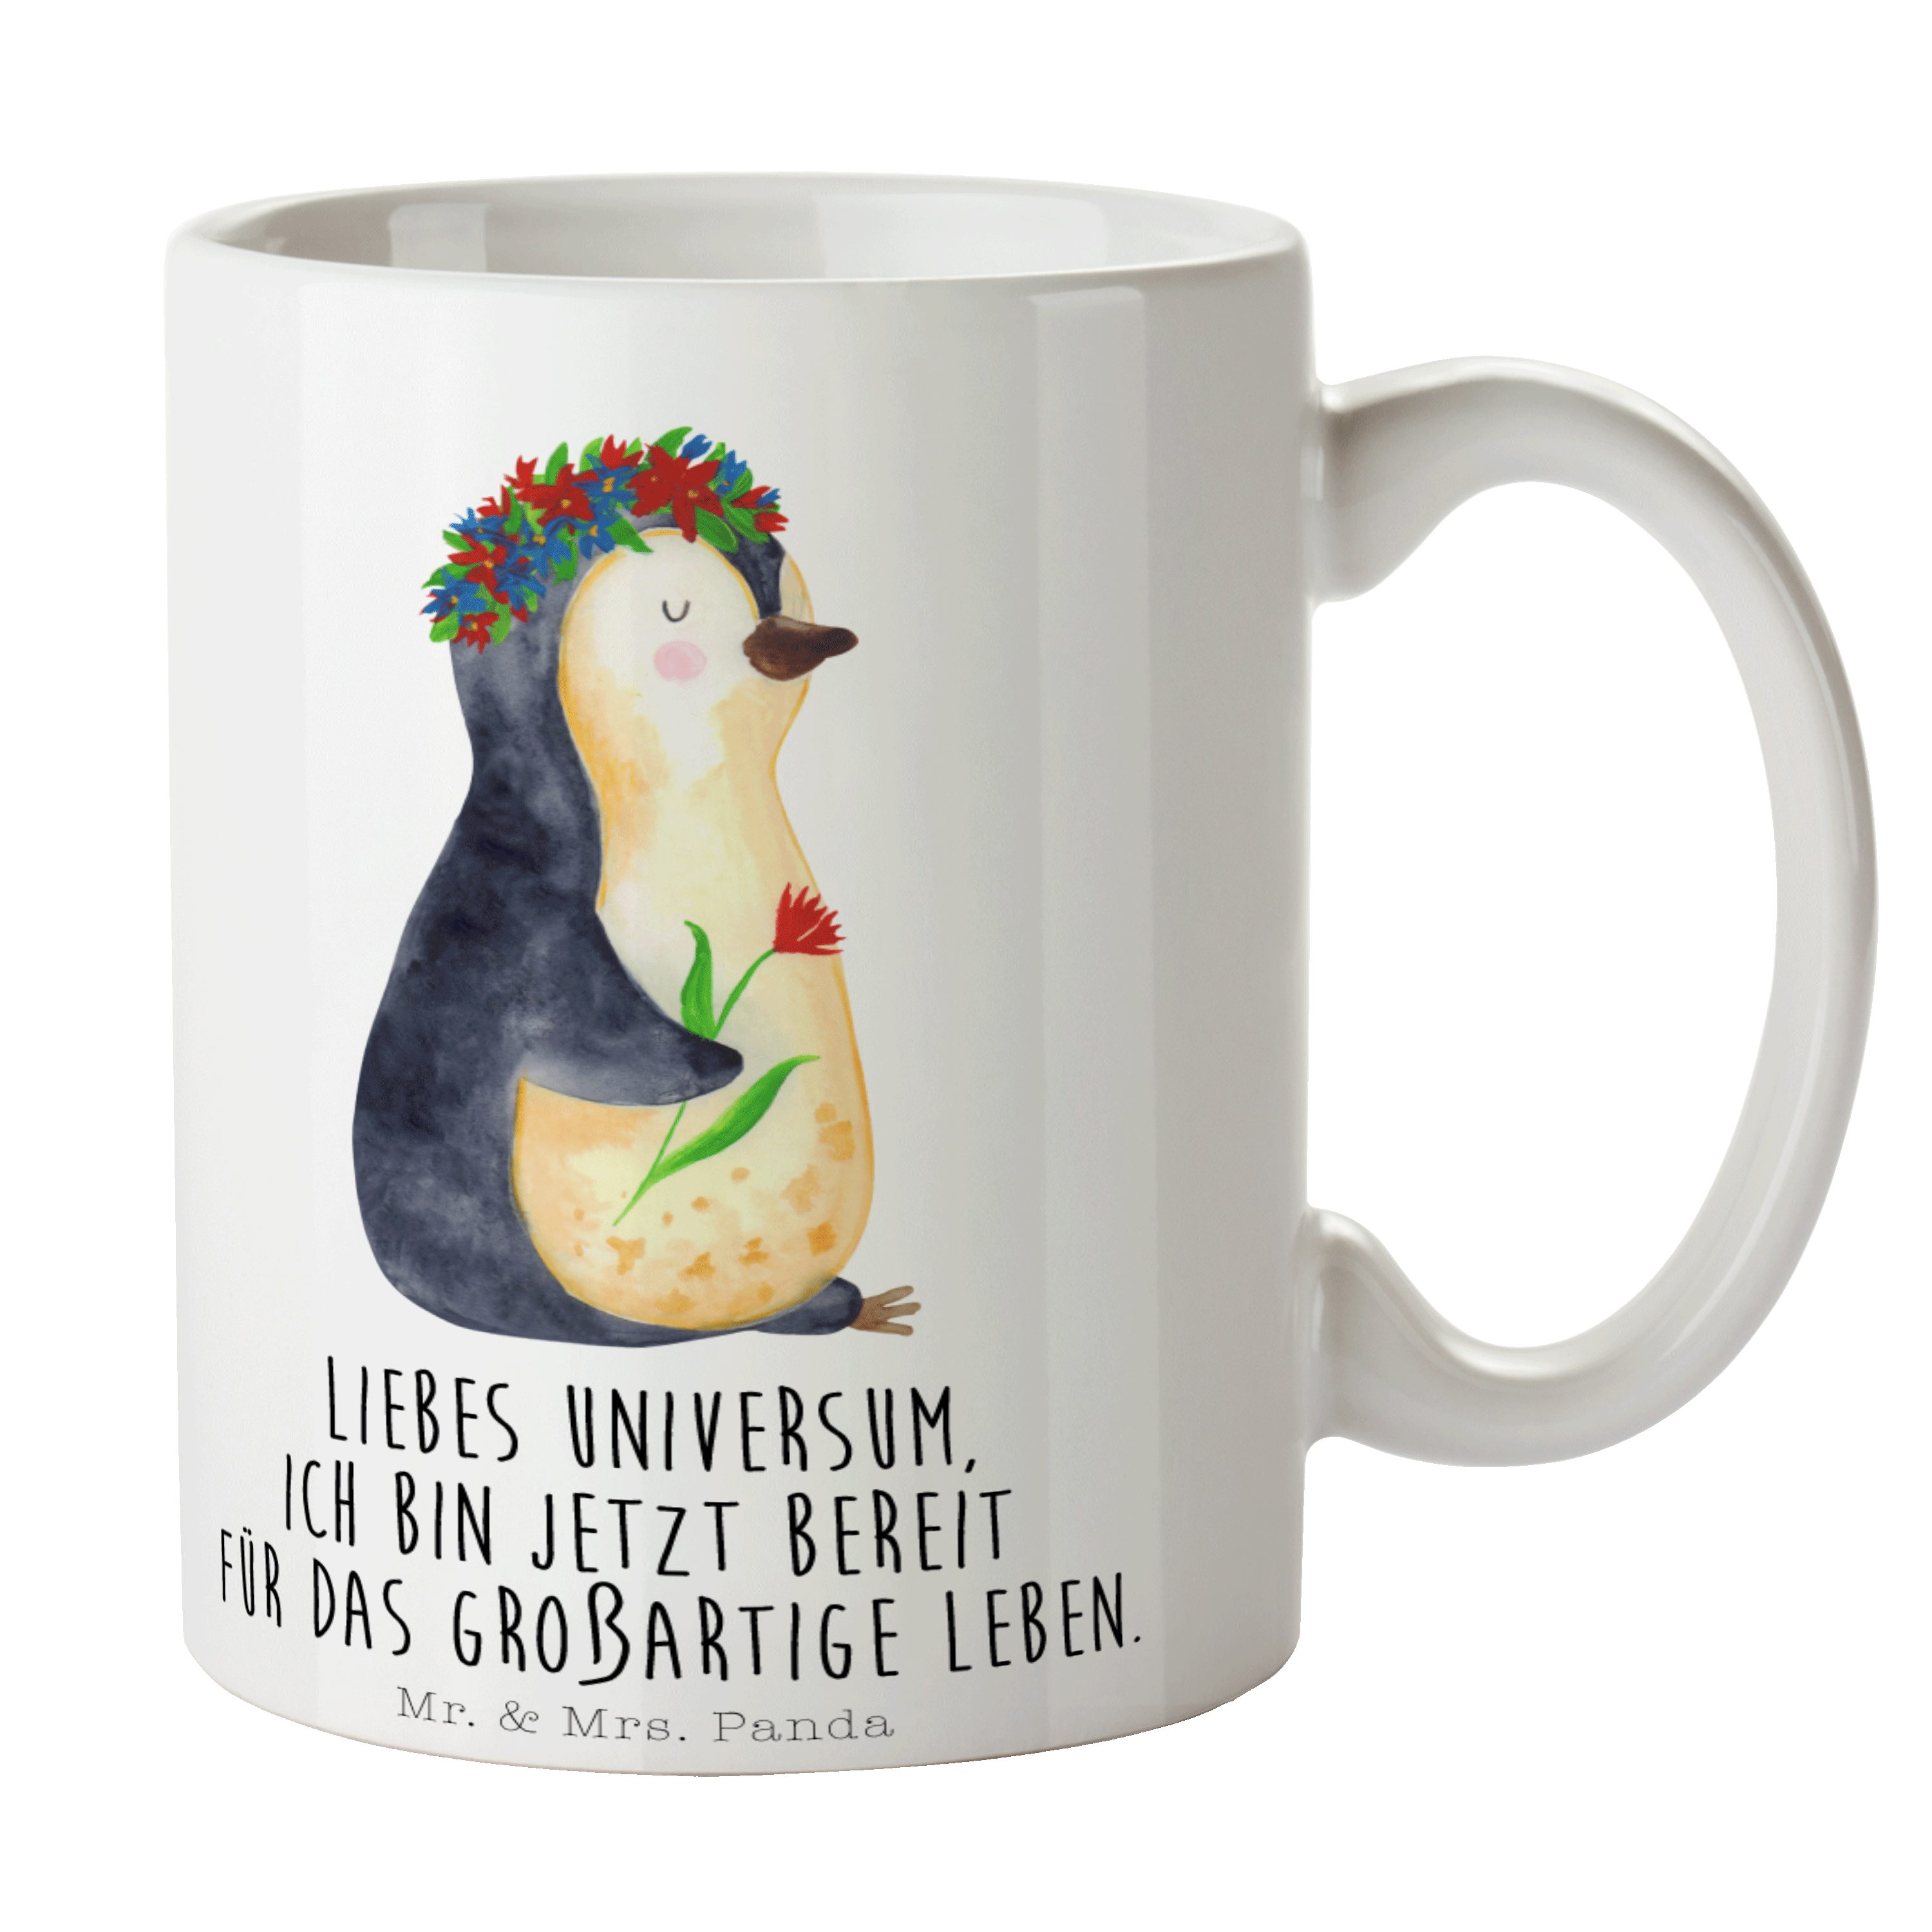 Mr. & Mrs. Panda Tasse Pinguin Blumenkranz - Weiß - Geschenk, Lebensziele, Tasse, Kaffeetass, Keramik | Tassen